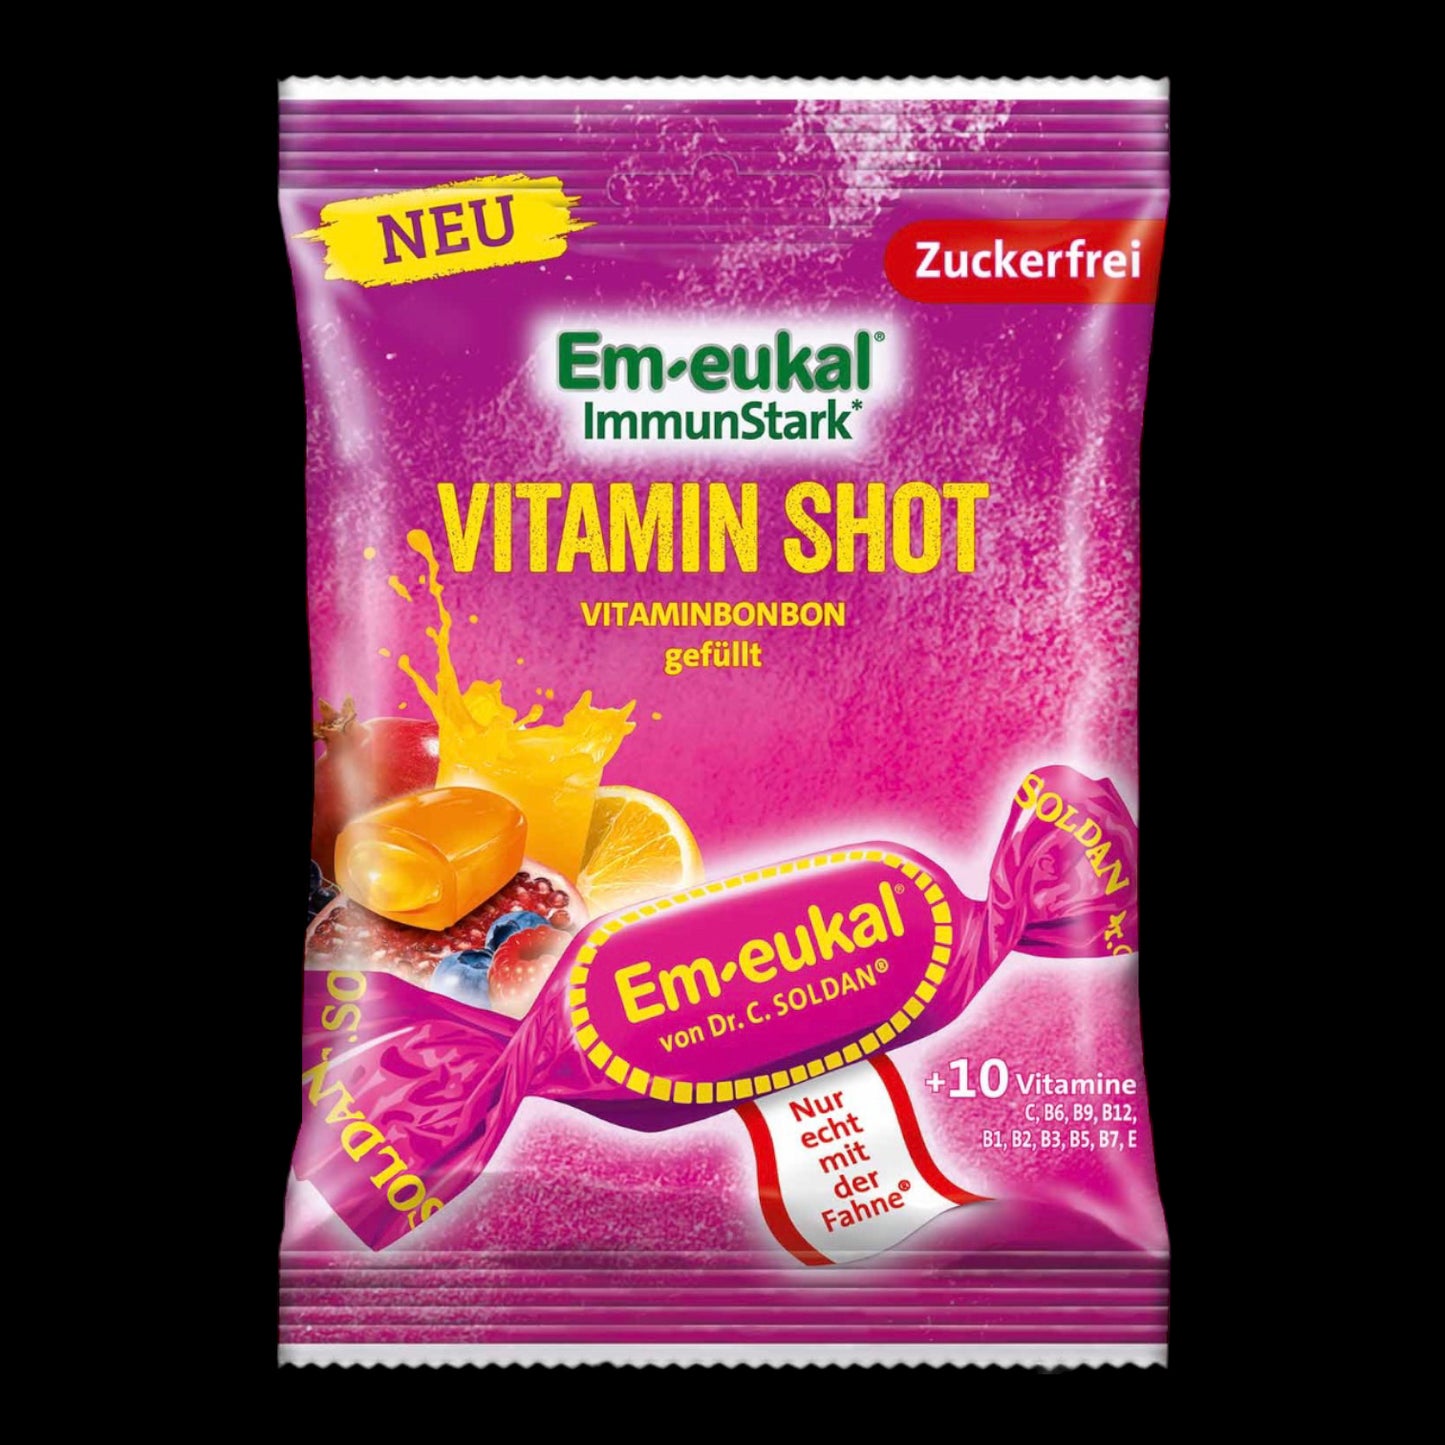 Em-eukal Vitamin Shot zuckerfrei 75g